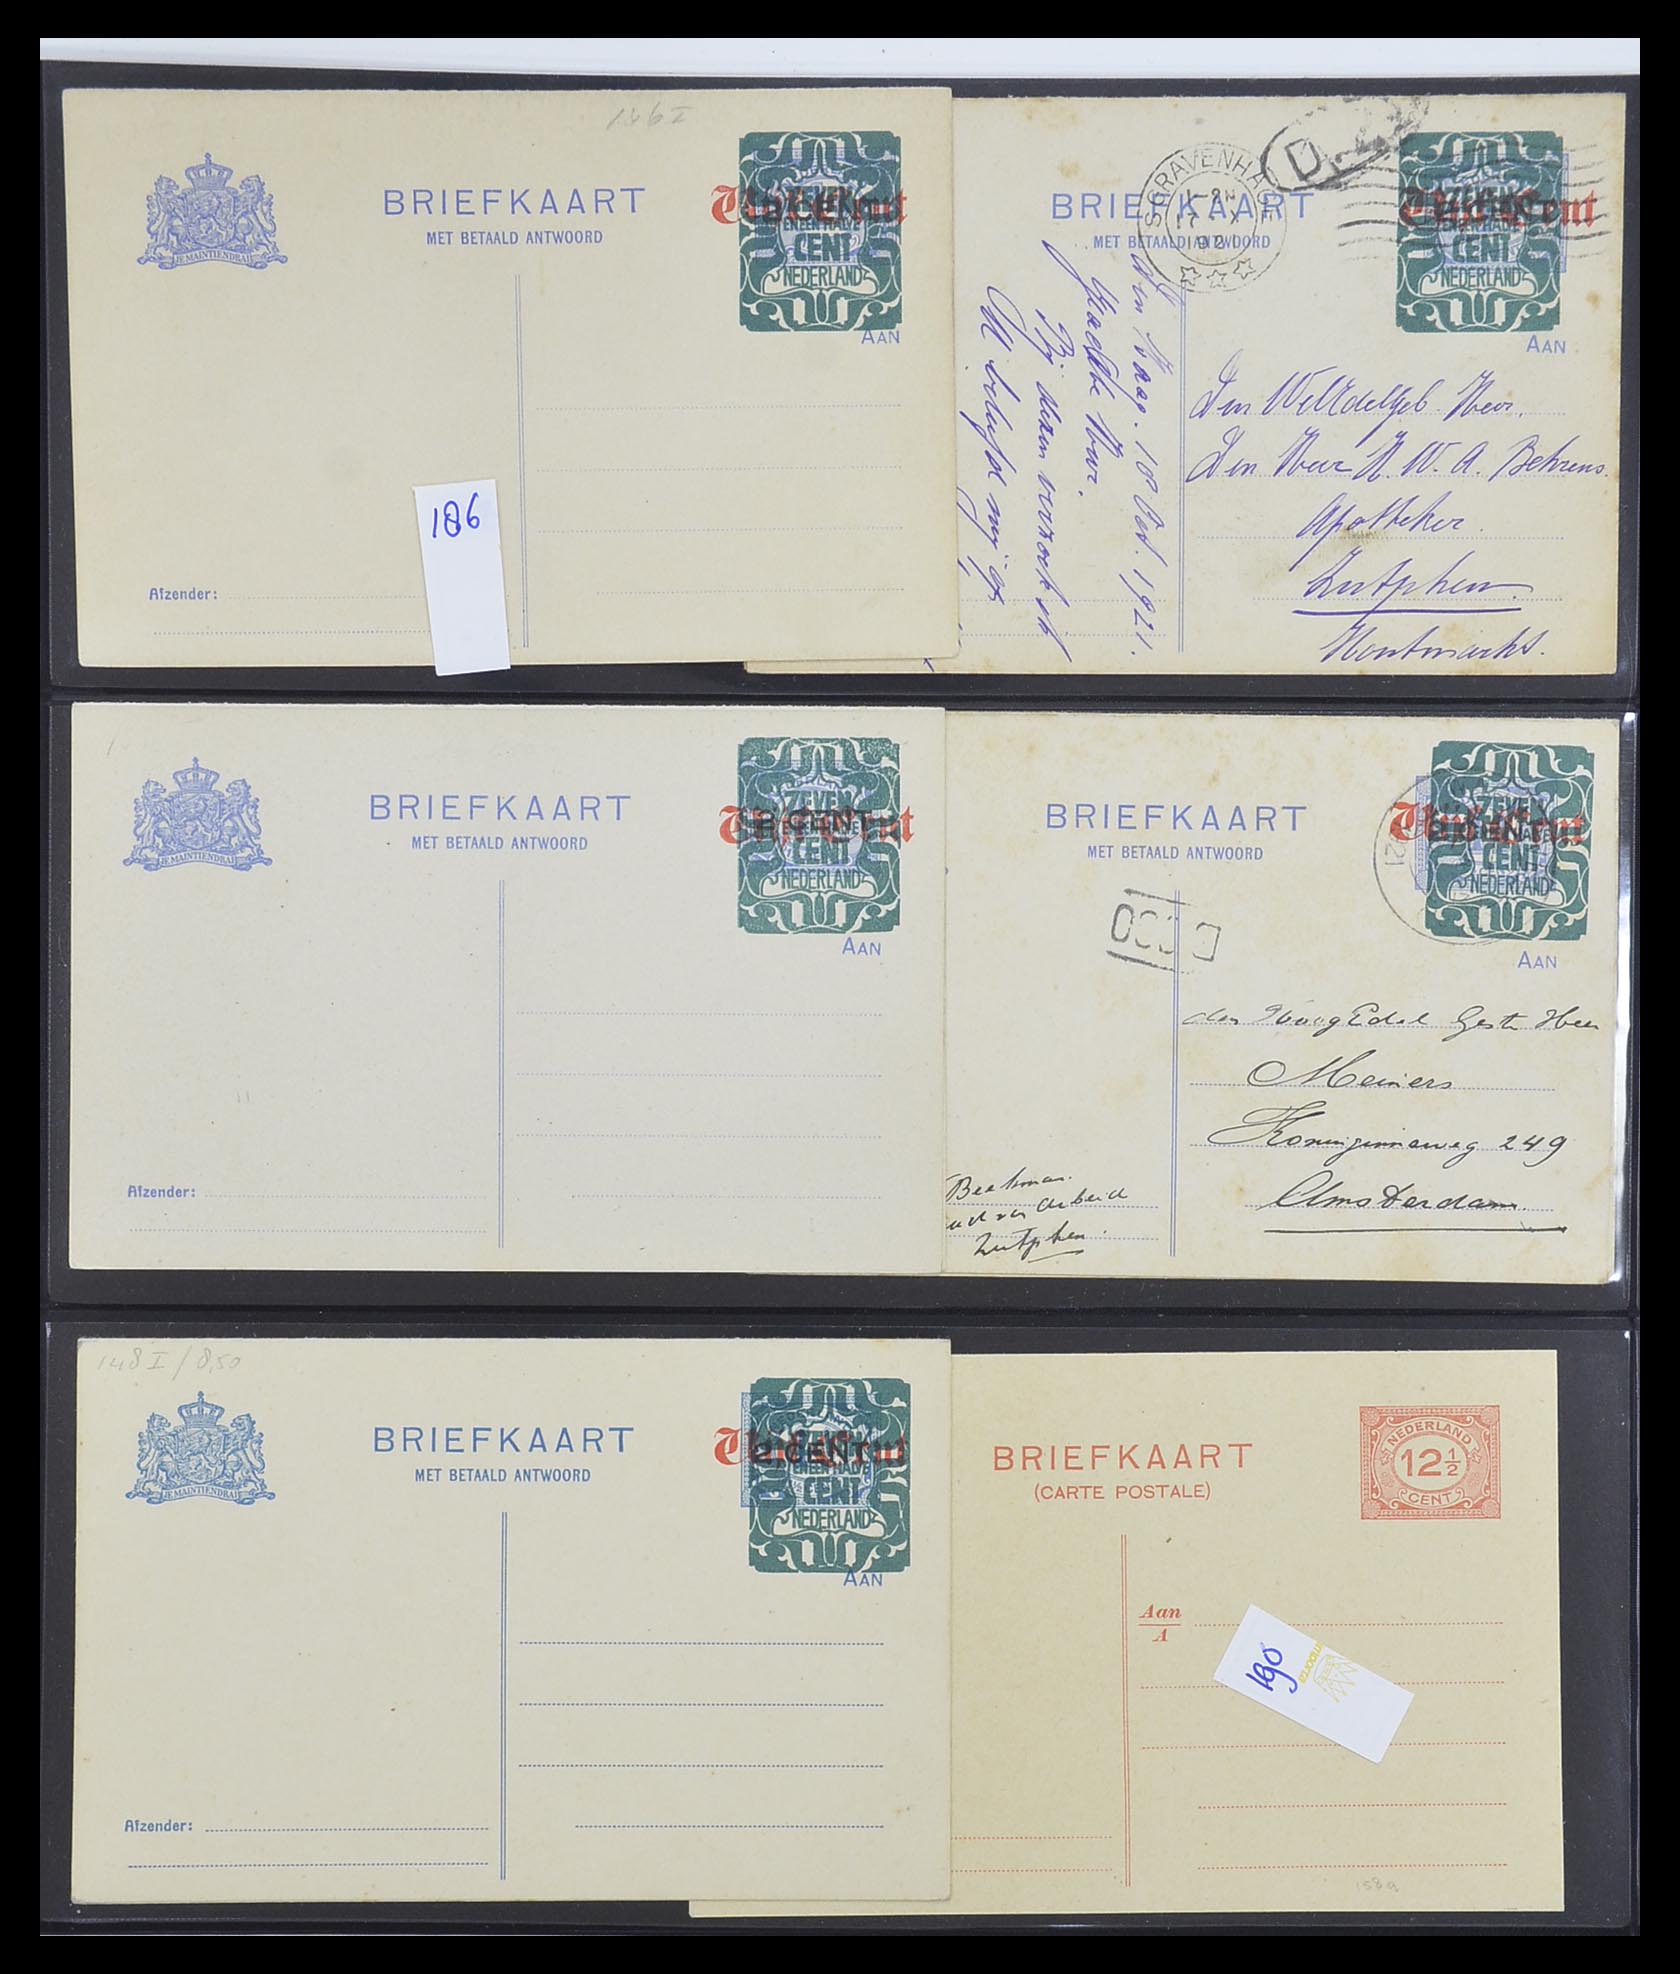 33534 054 - Stamp collection 33534 Netherlands postal stationeries 1871-2010.